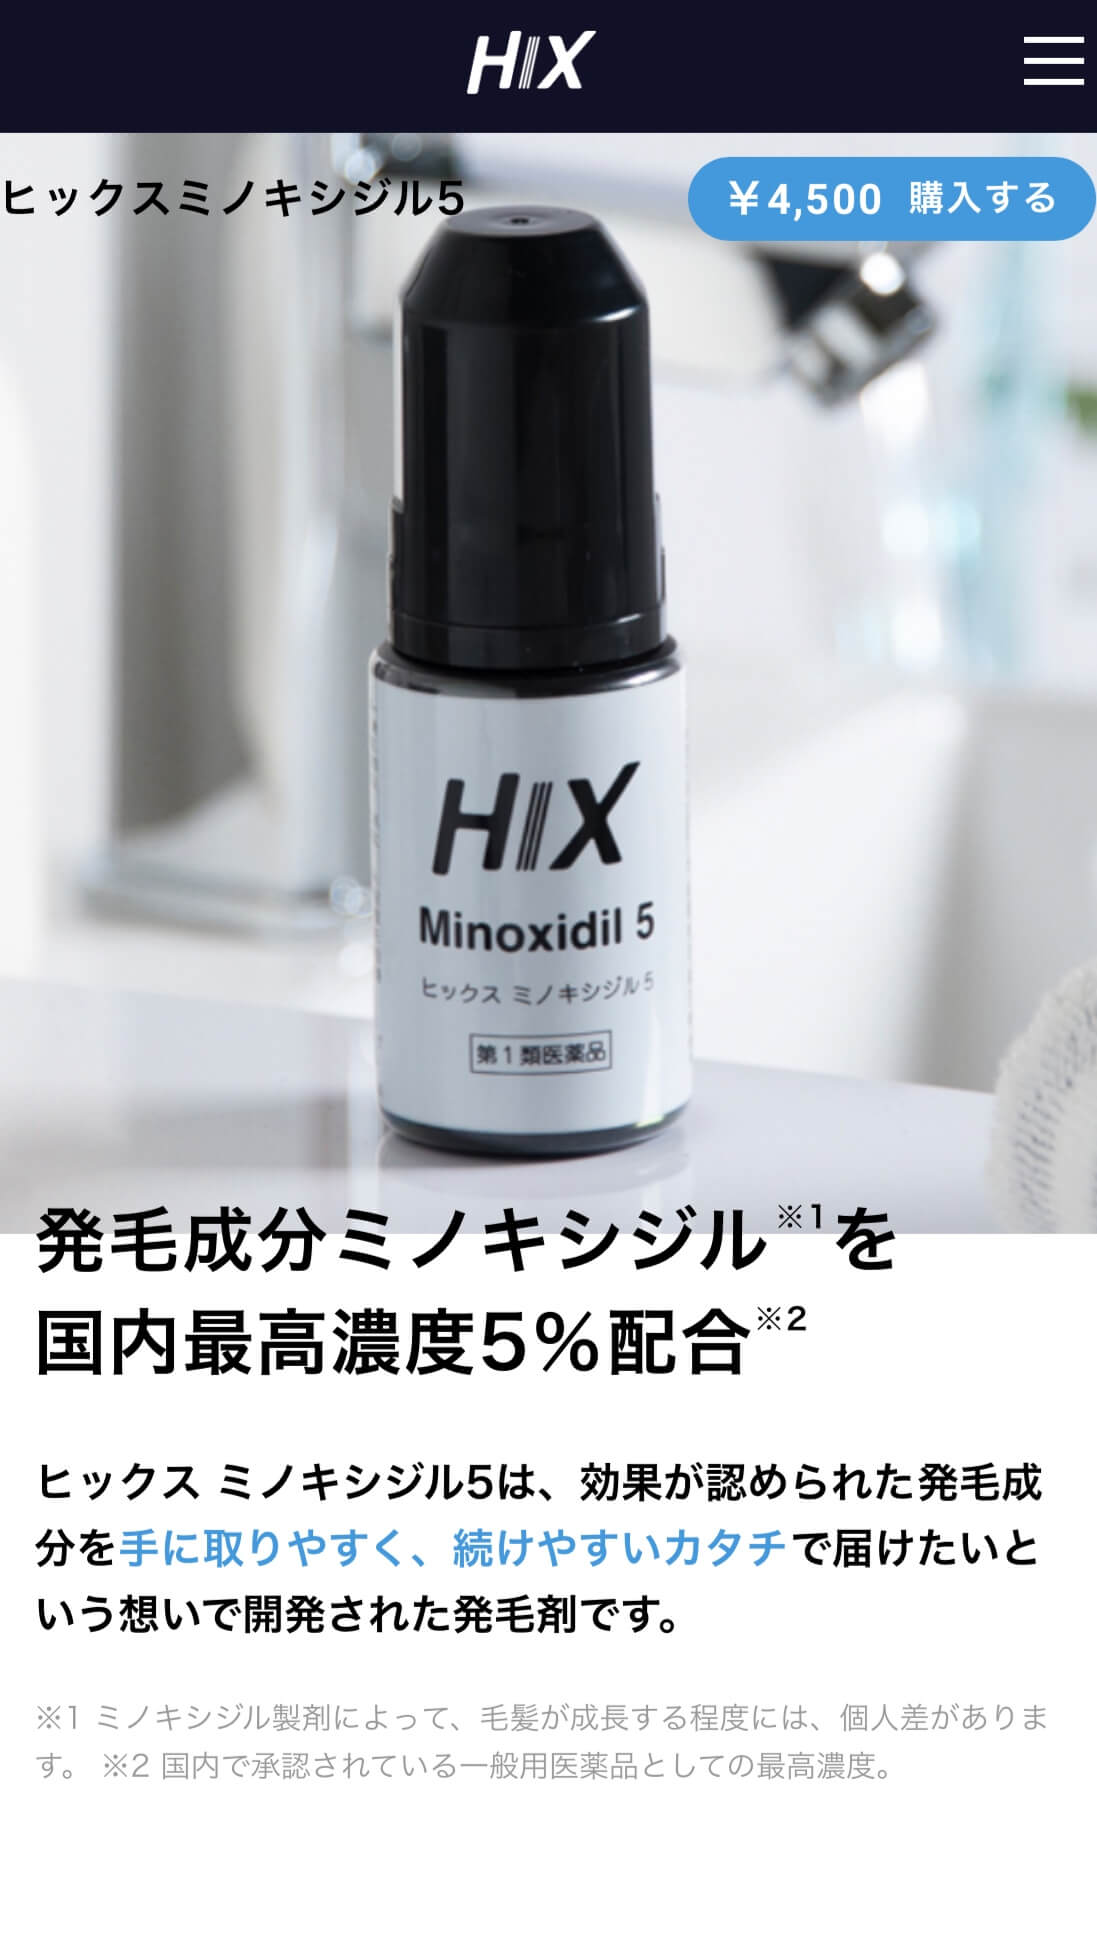 HIX (ヒックス)ミノキシジル公式サイトから購入の簡単STEP